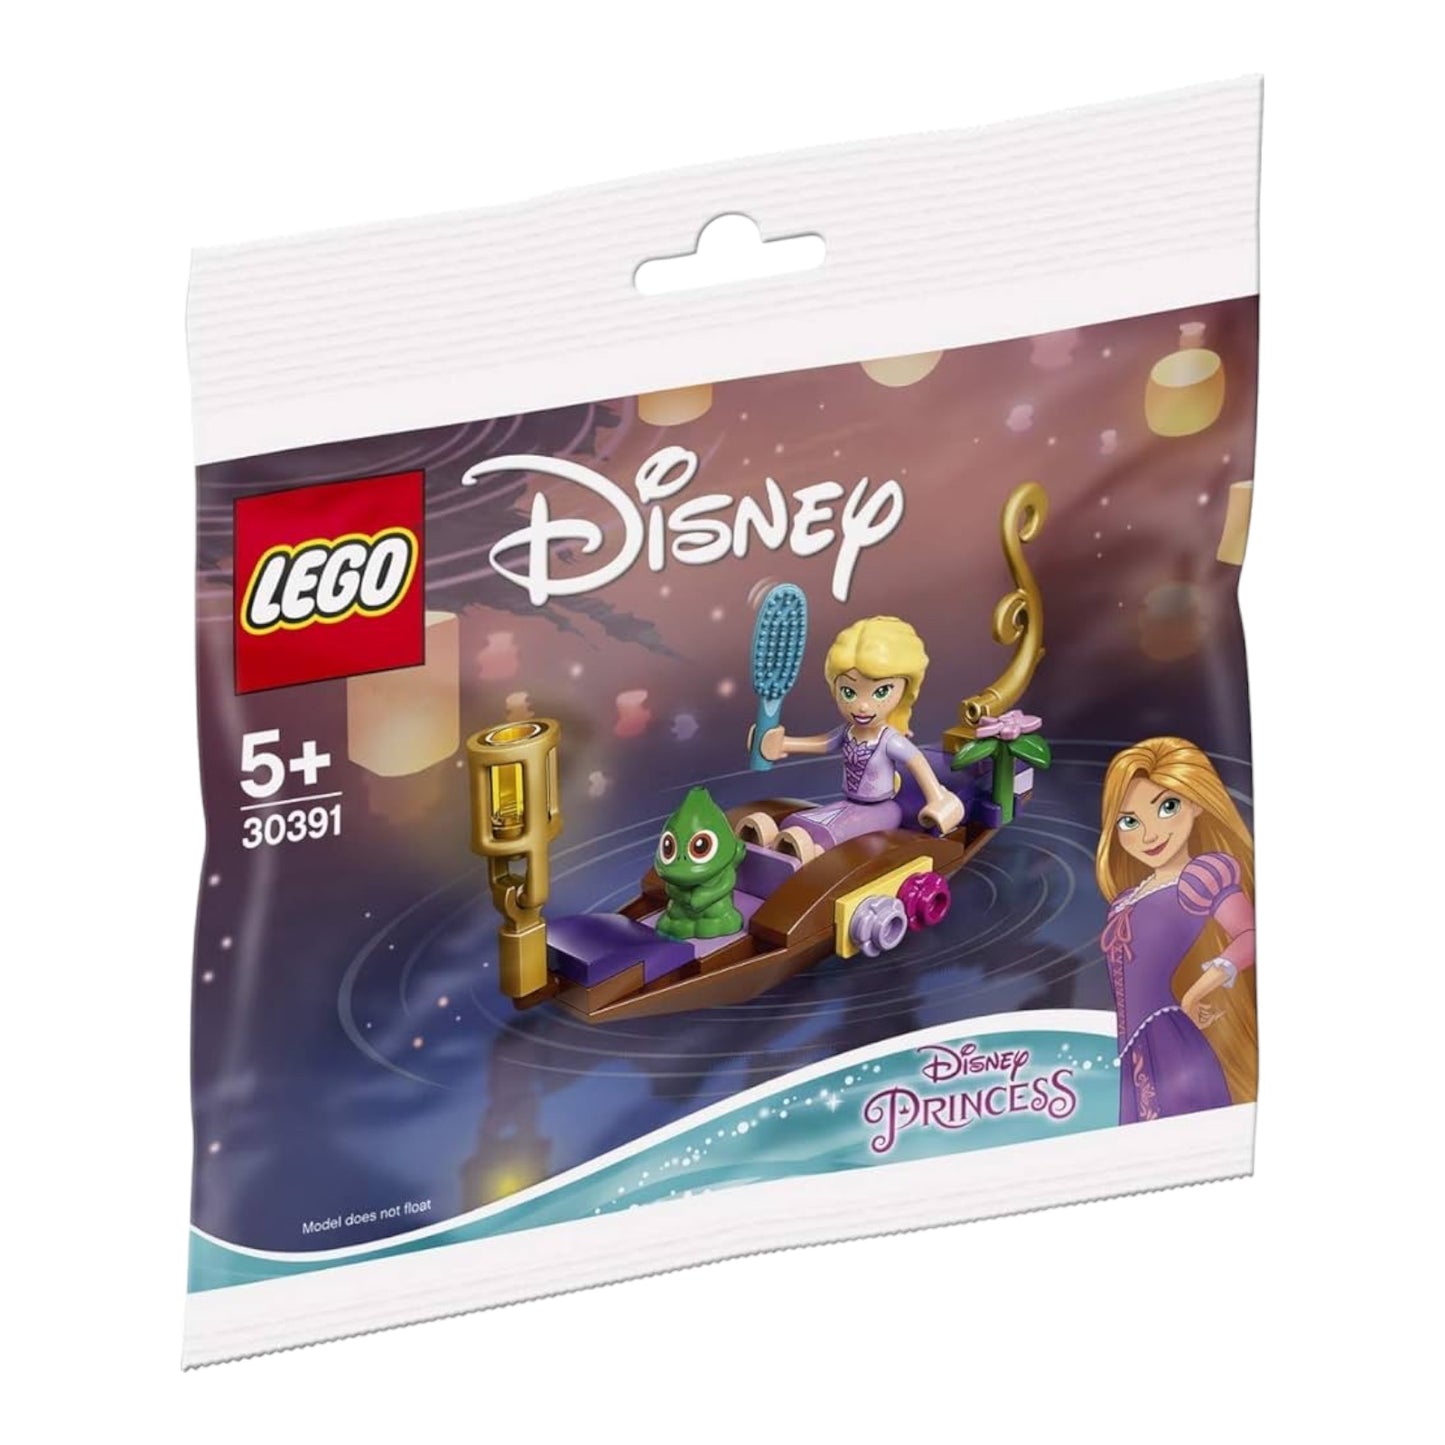 LEGO Disney Princess Rapunzel On Boat - 30391 Retired Set